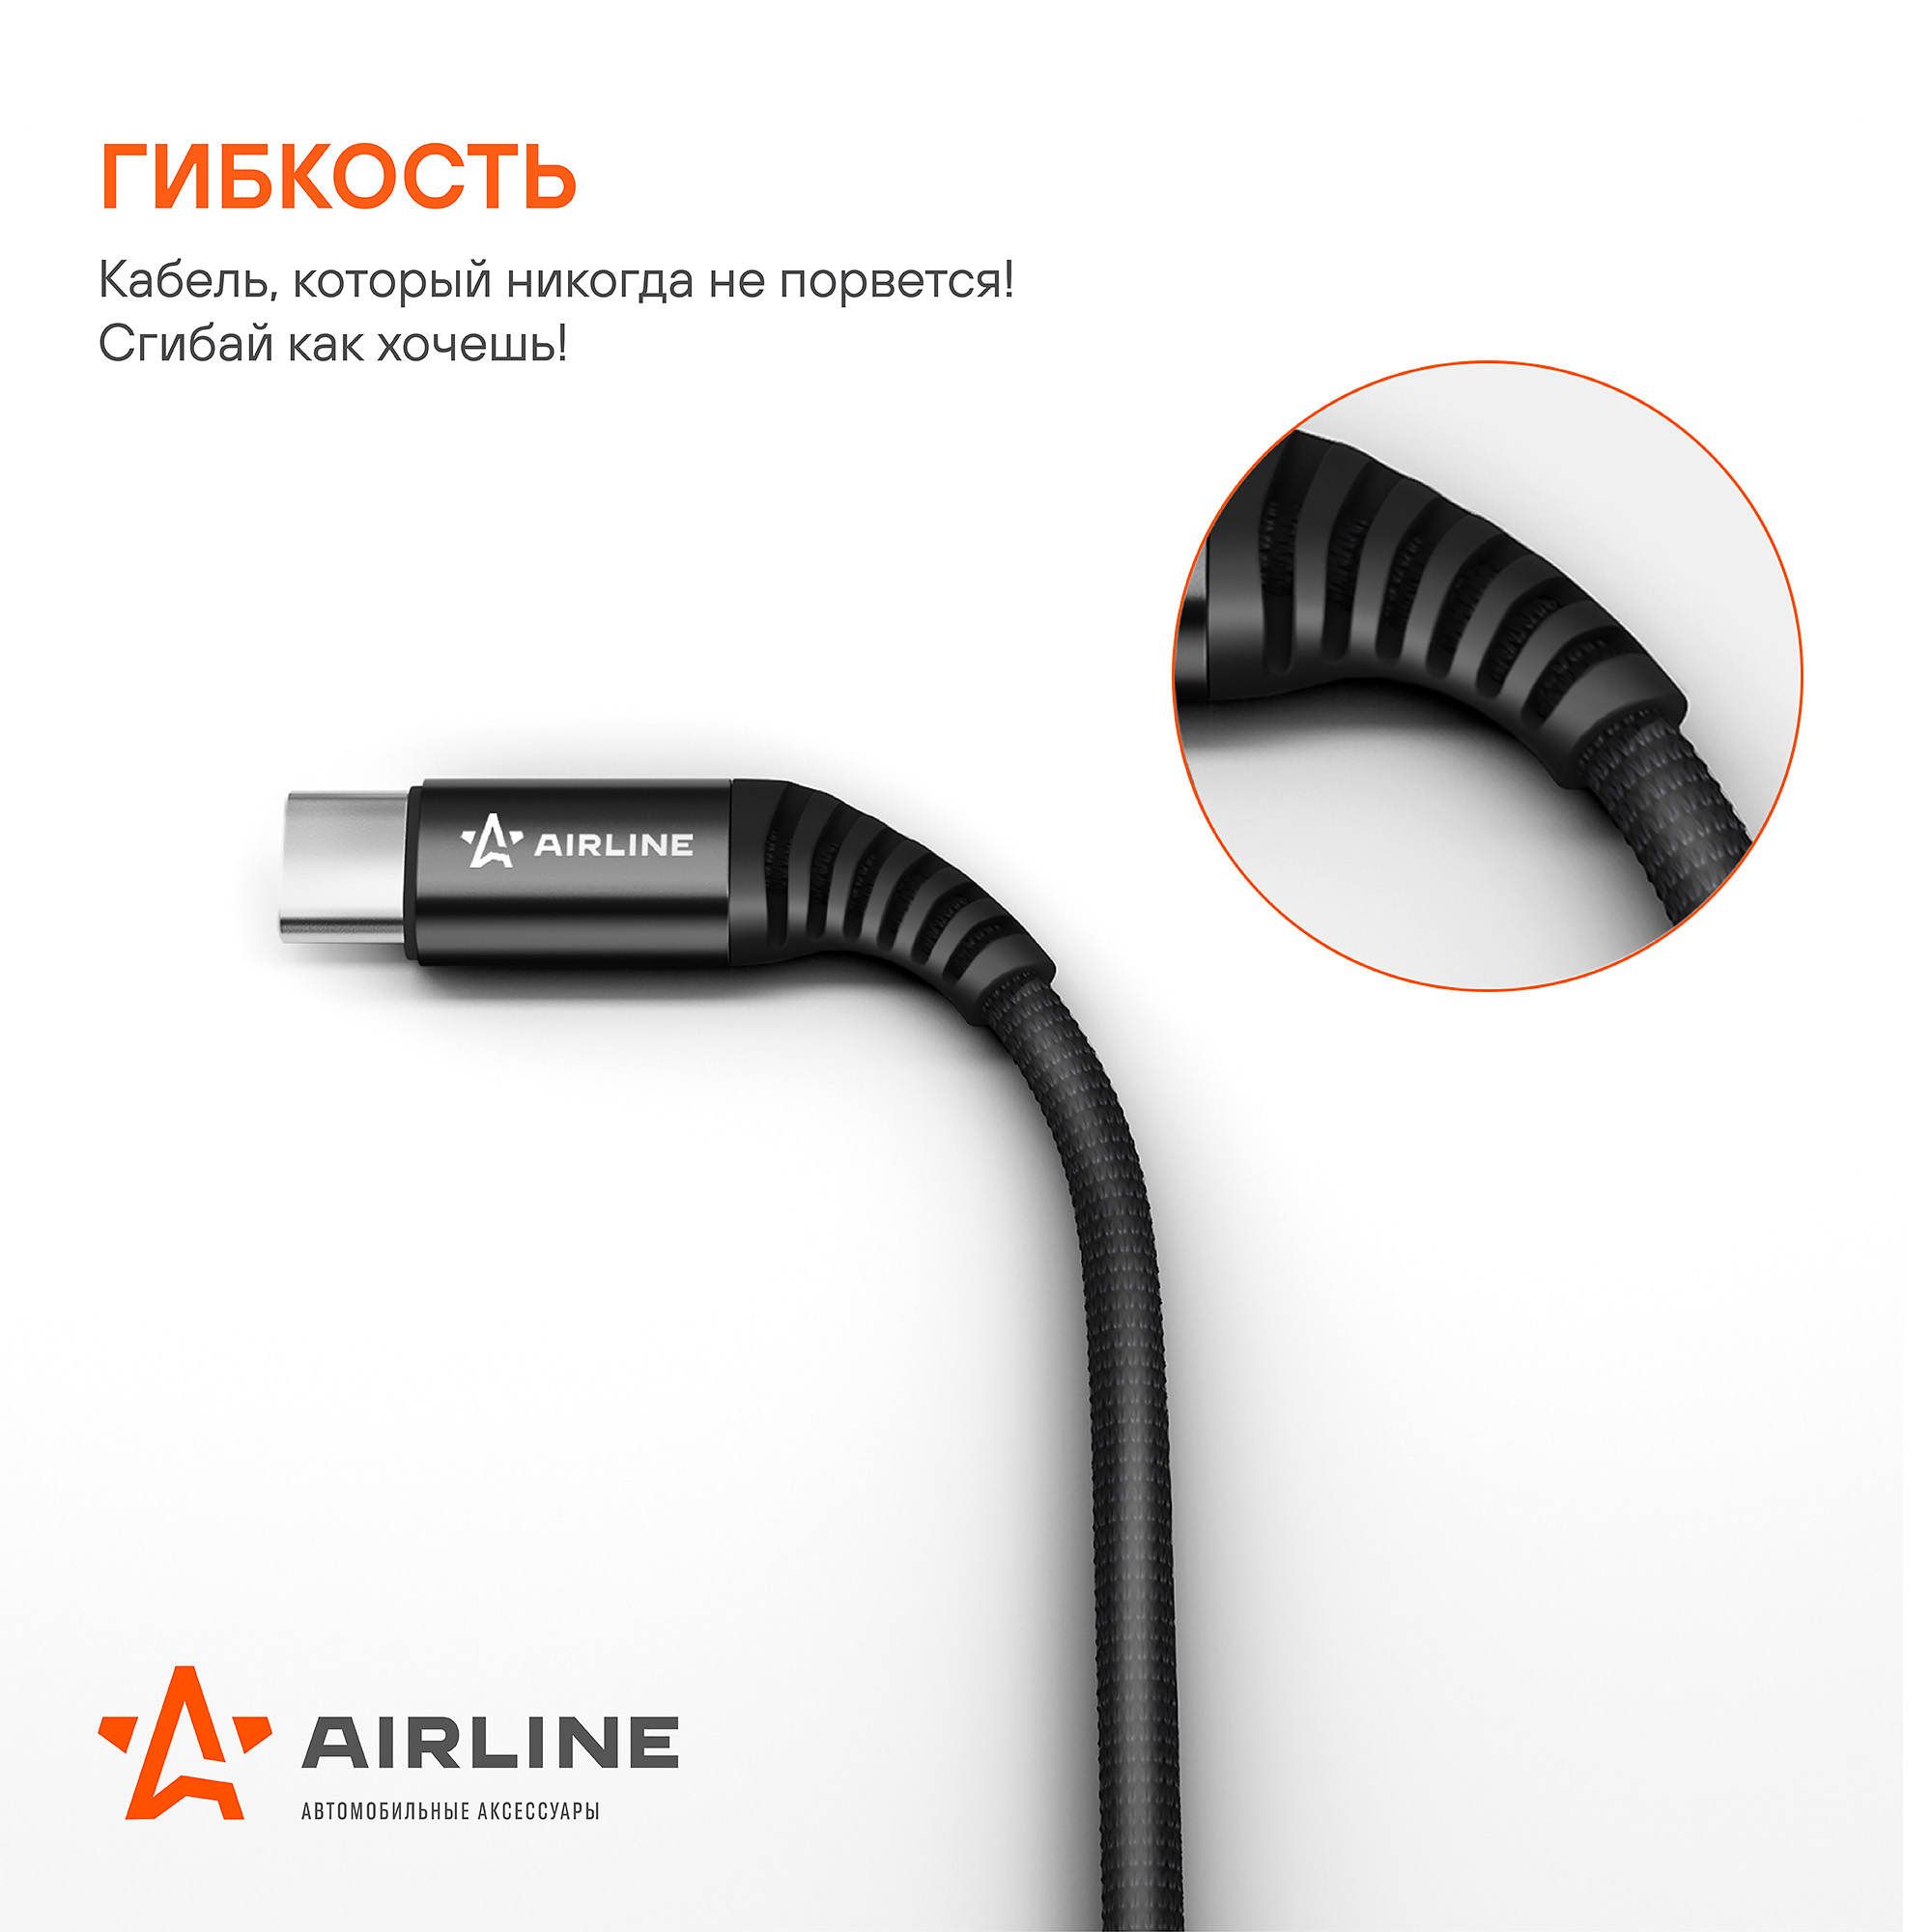 Датакабель Airline USB Type-C, нейлоновая оплетка Airline от магазина Tehnorama